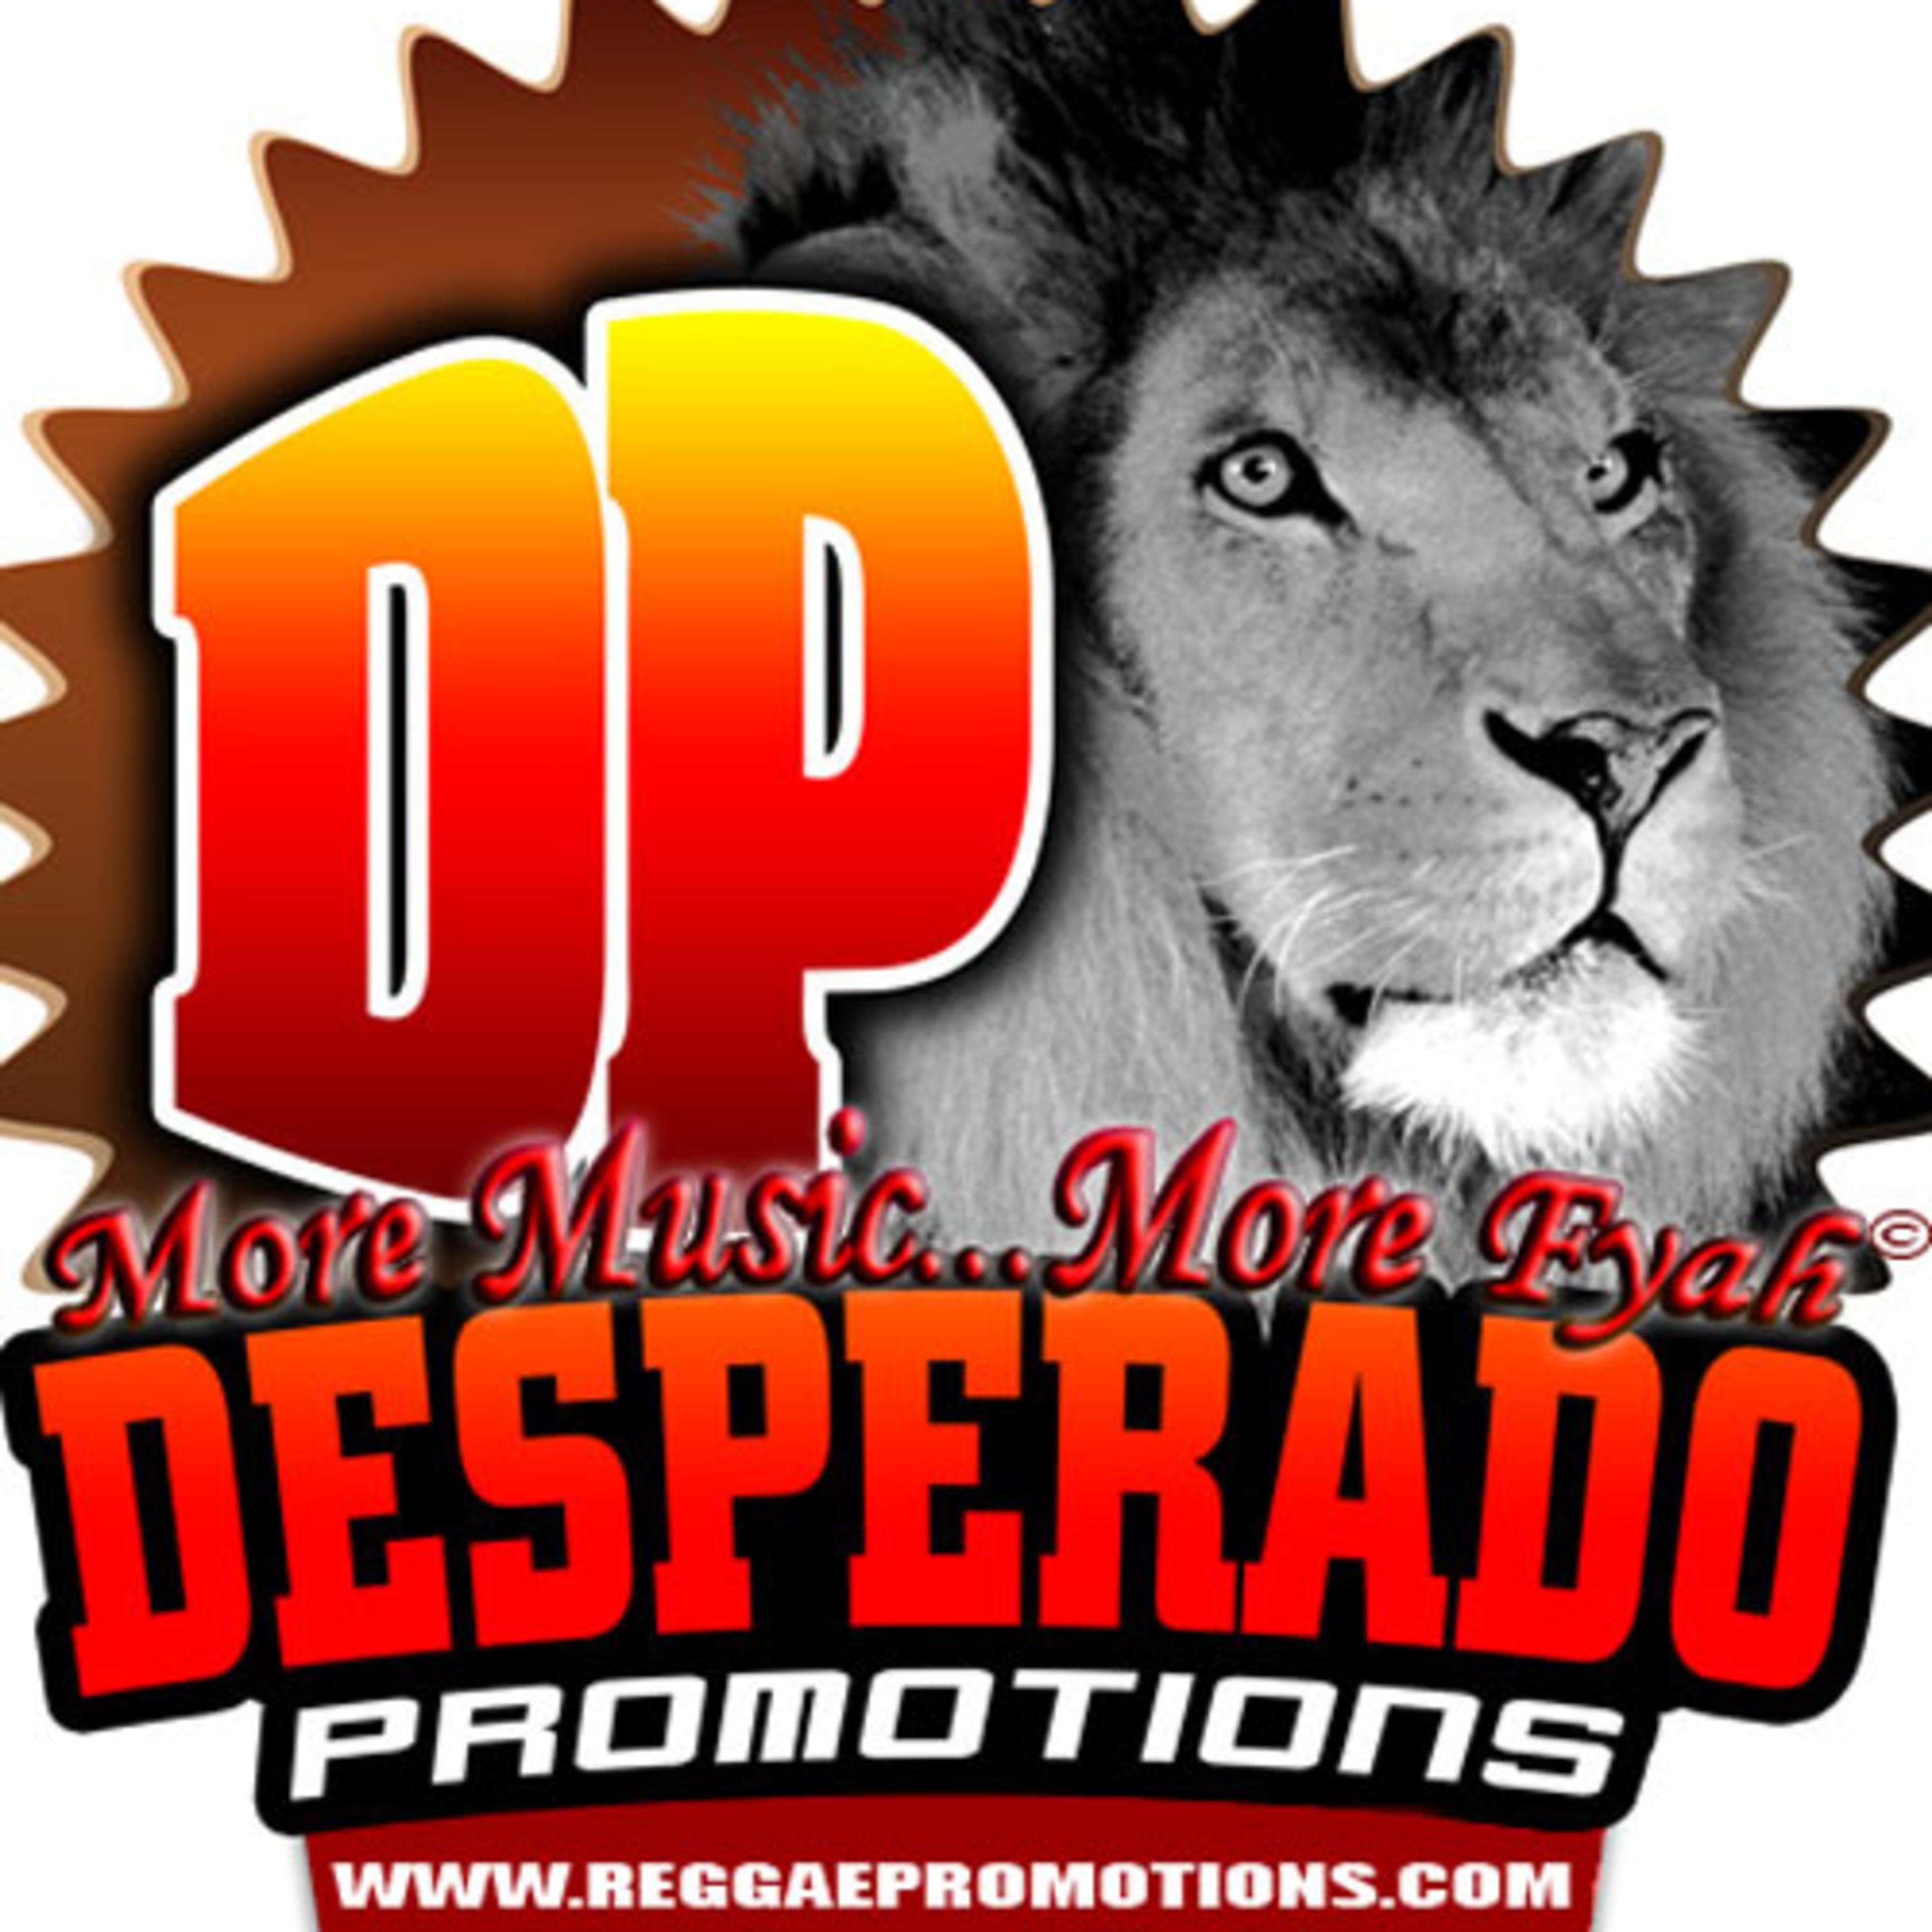 Desperado Promotions - Reggae